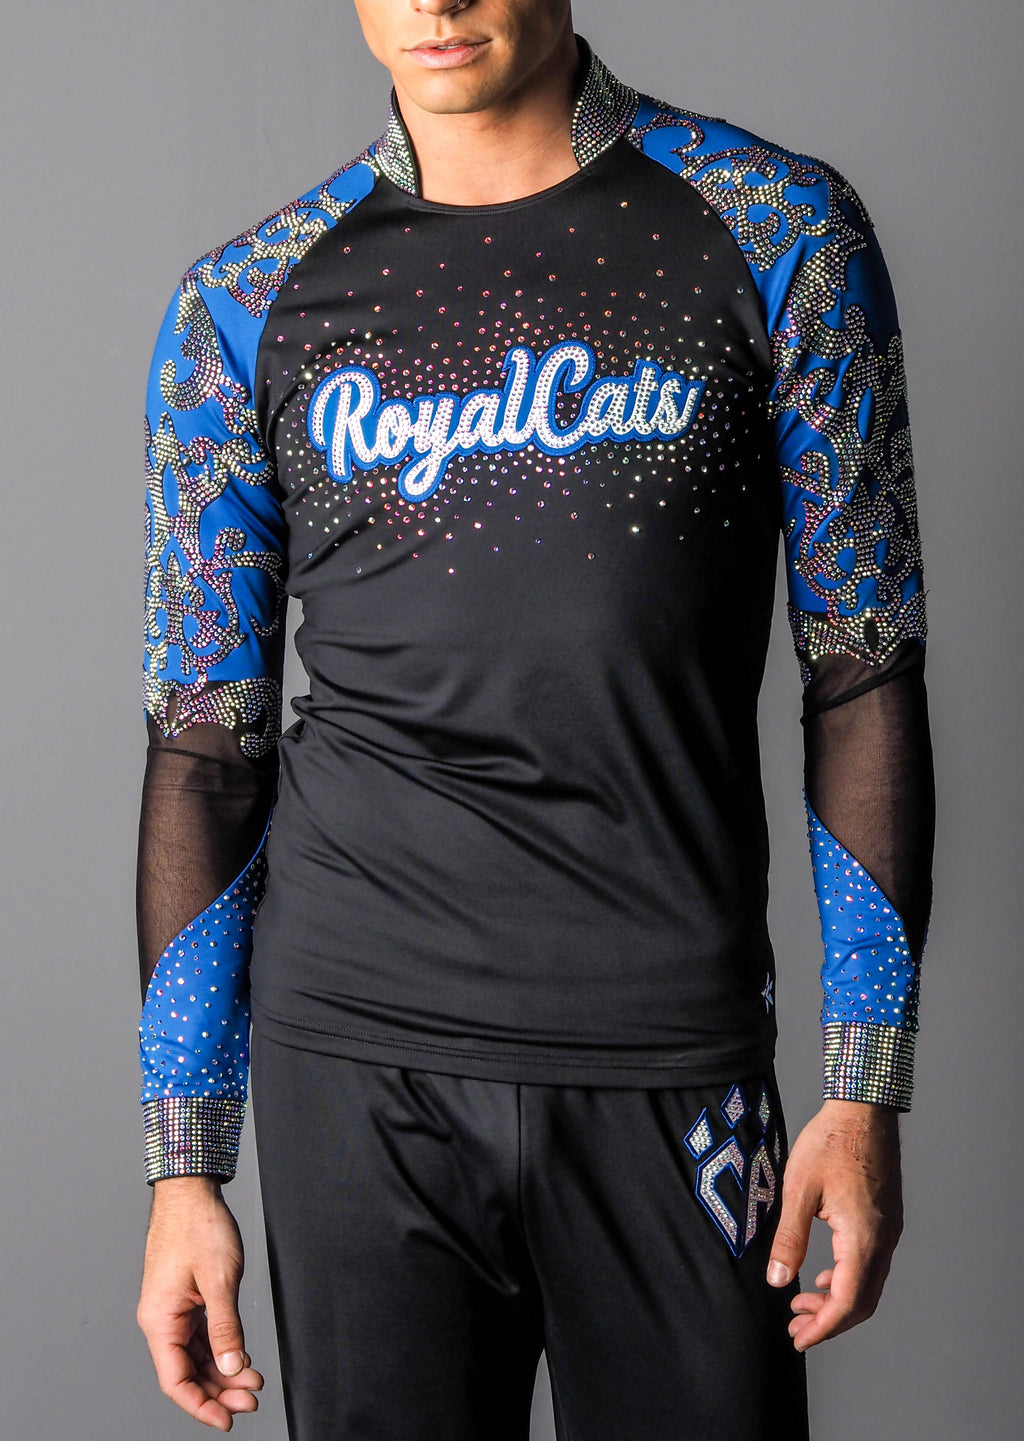 Charlotte Royalcats Uniform Male Top Cheer Athletics Pro Shop 